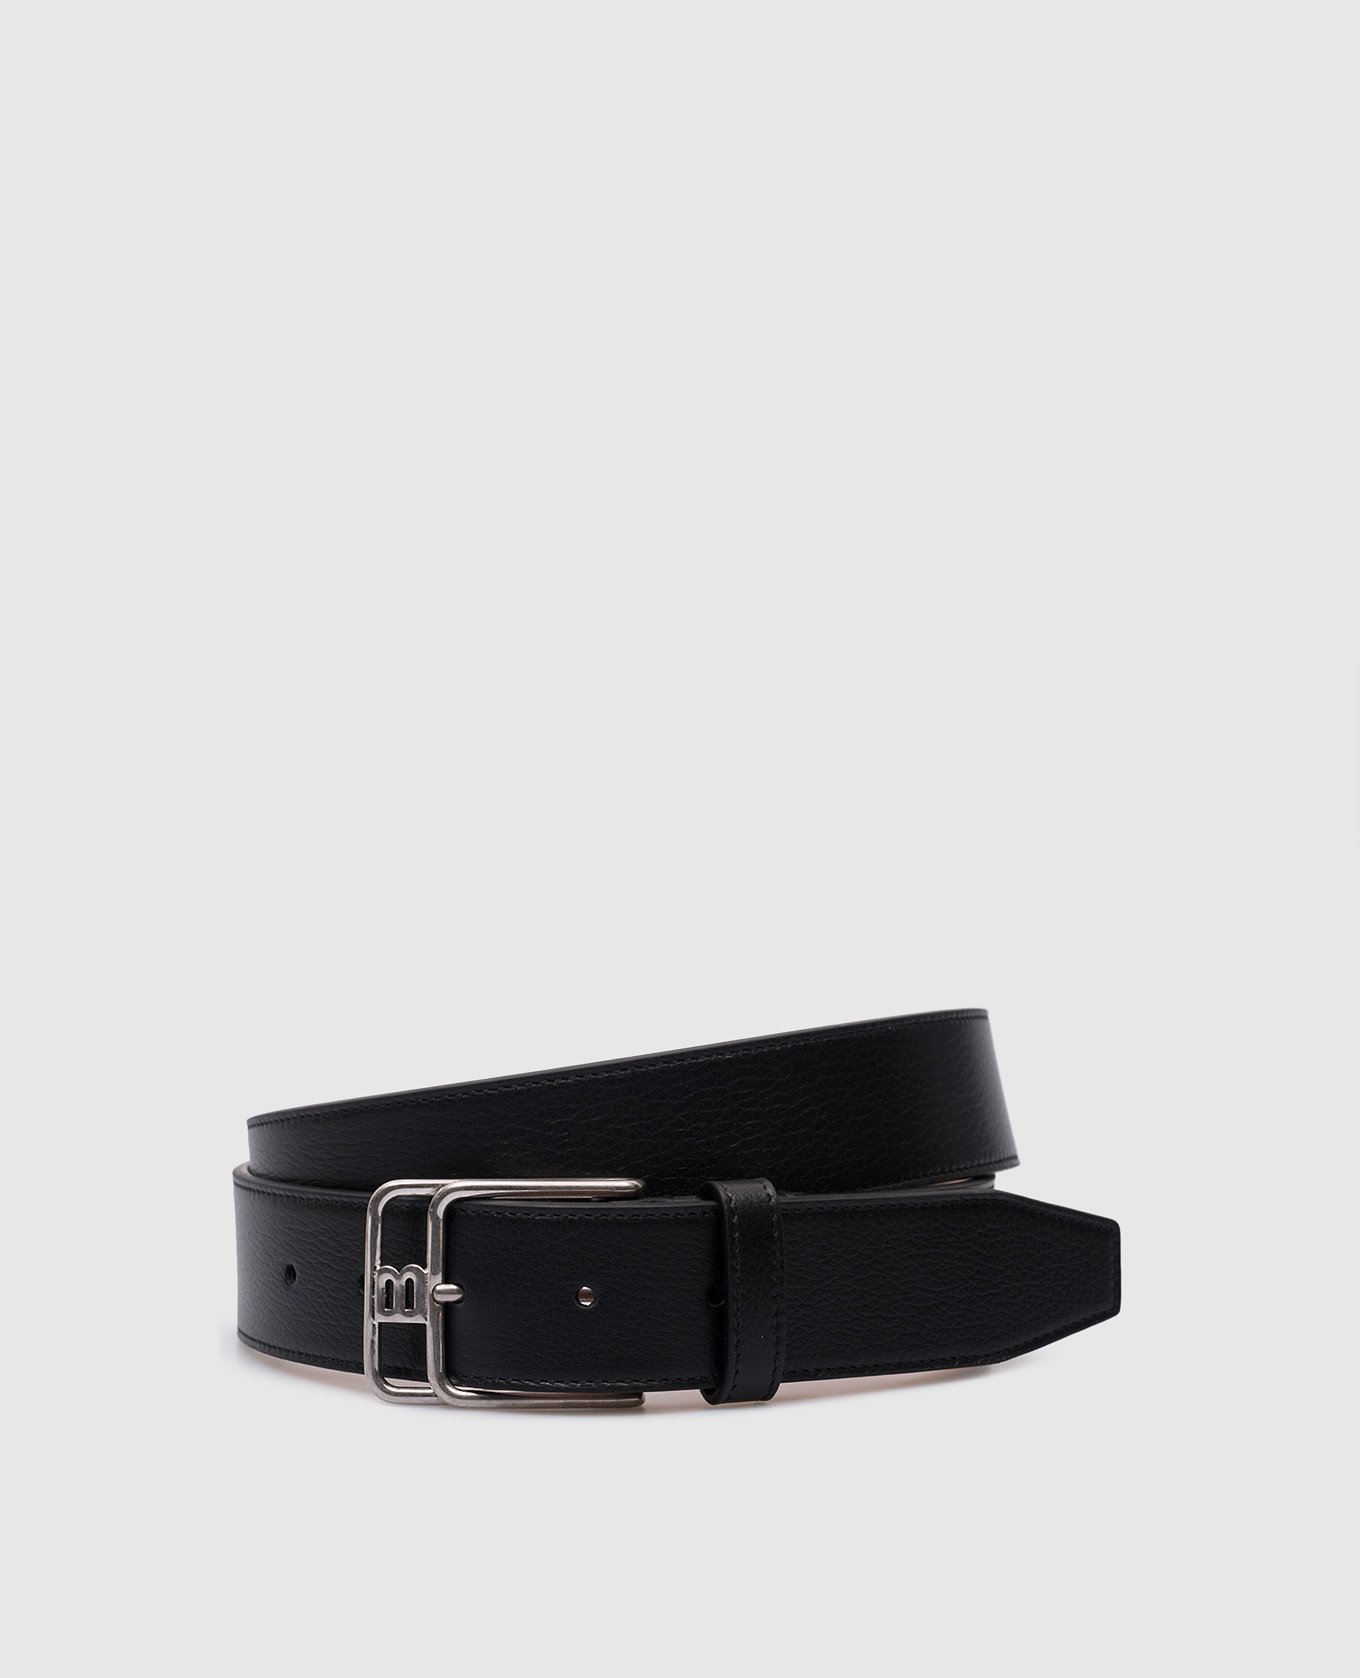 Black leather belt with logo